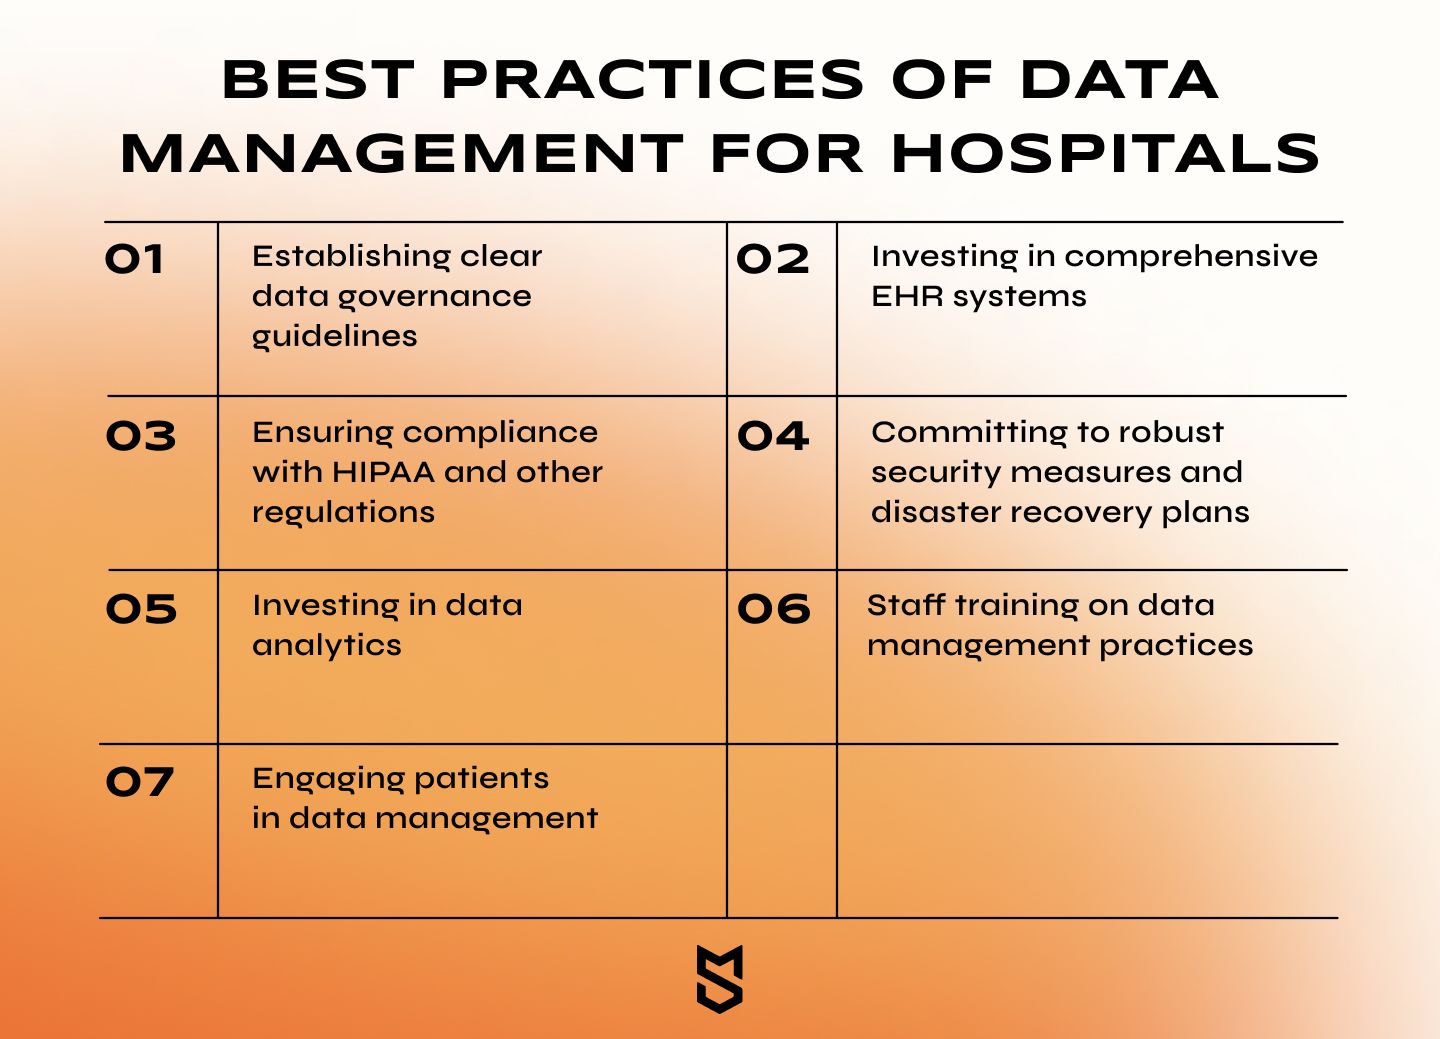 Best data management practices for hospitals